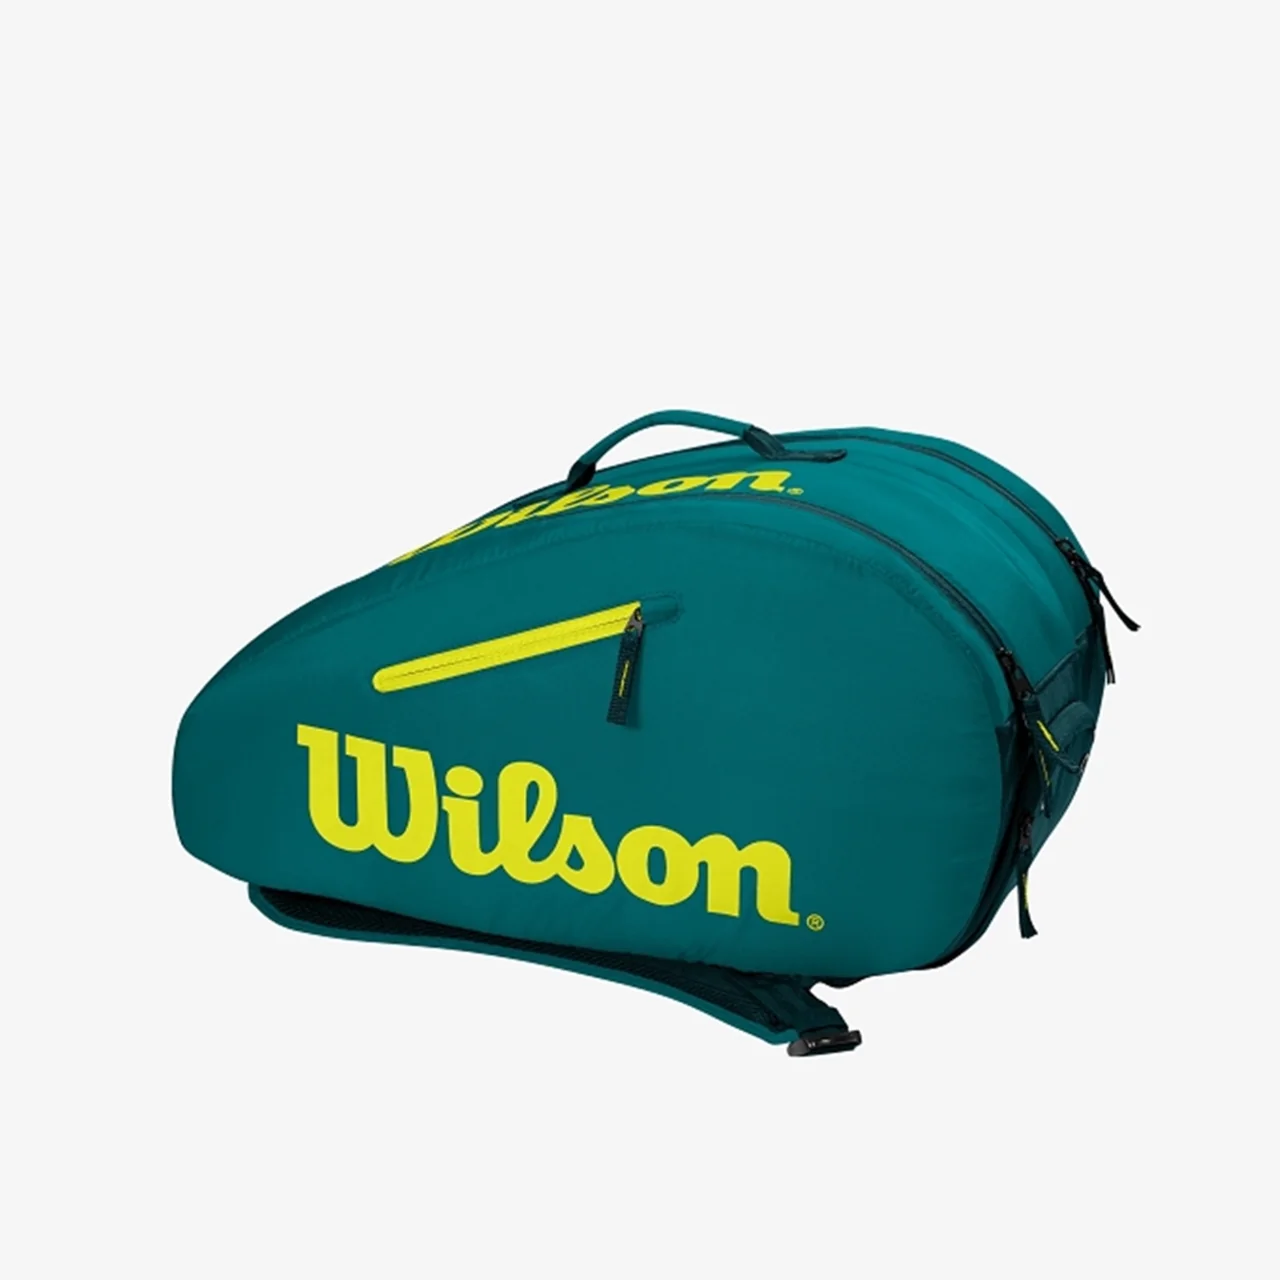 Wilson Youth Padel Racket Bag Green/Yellow